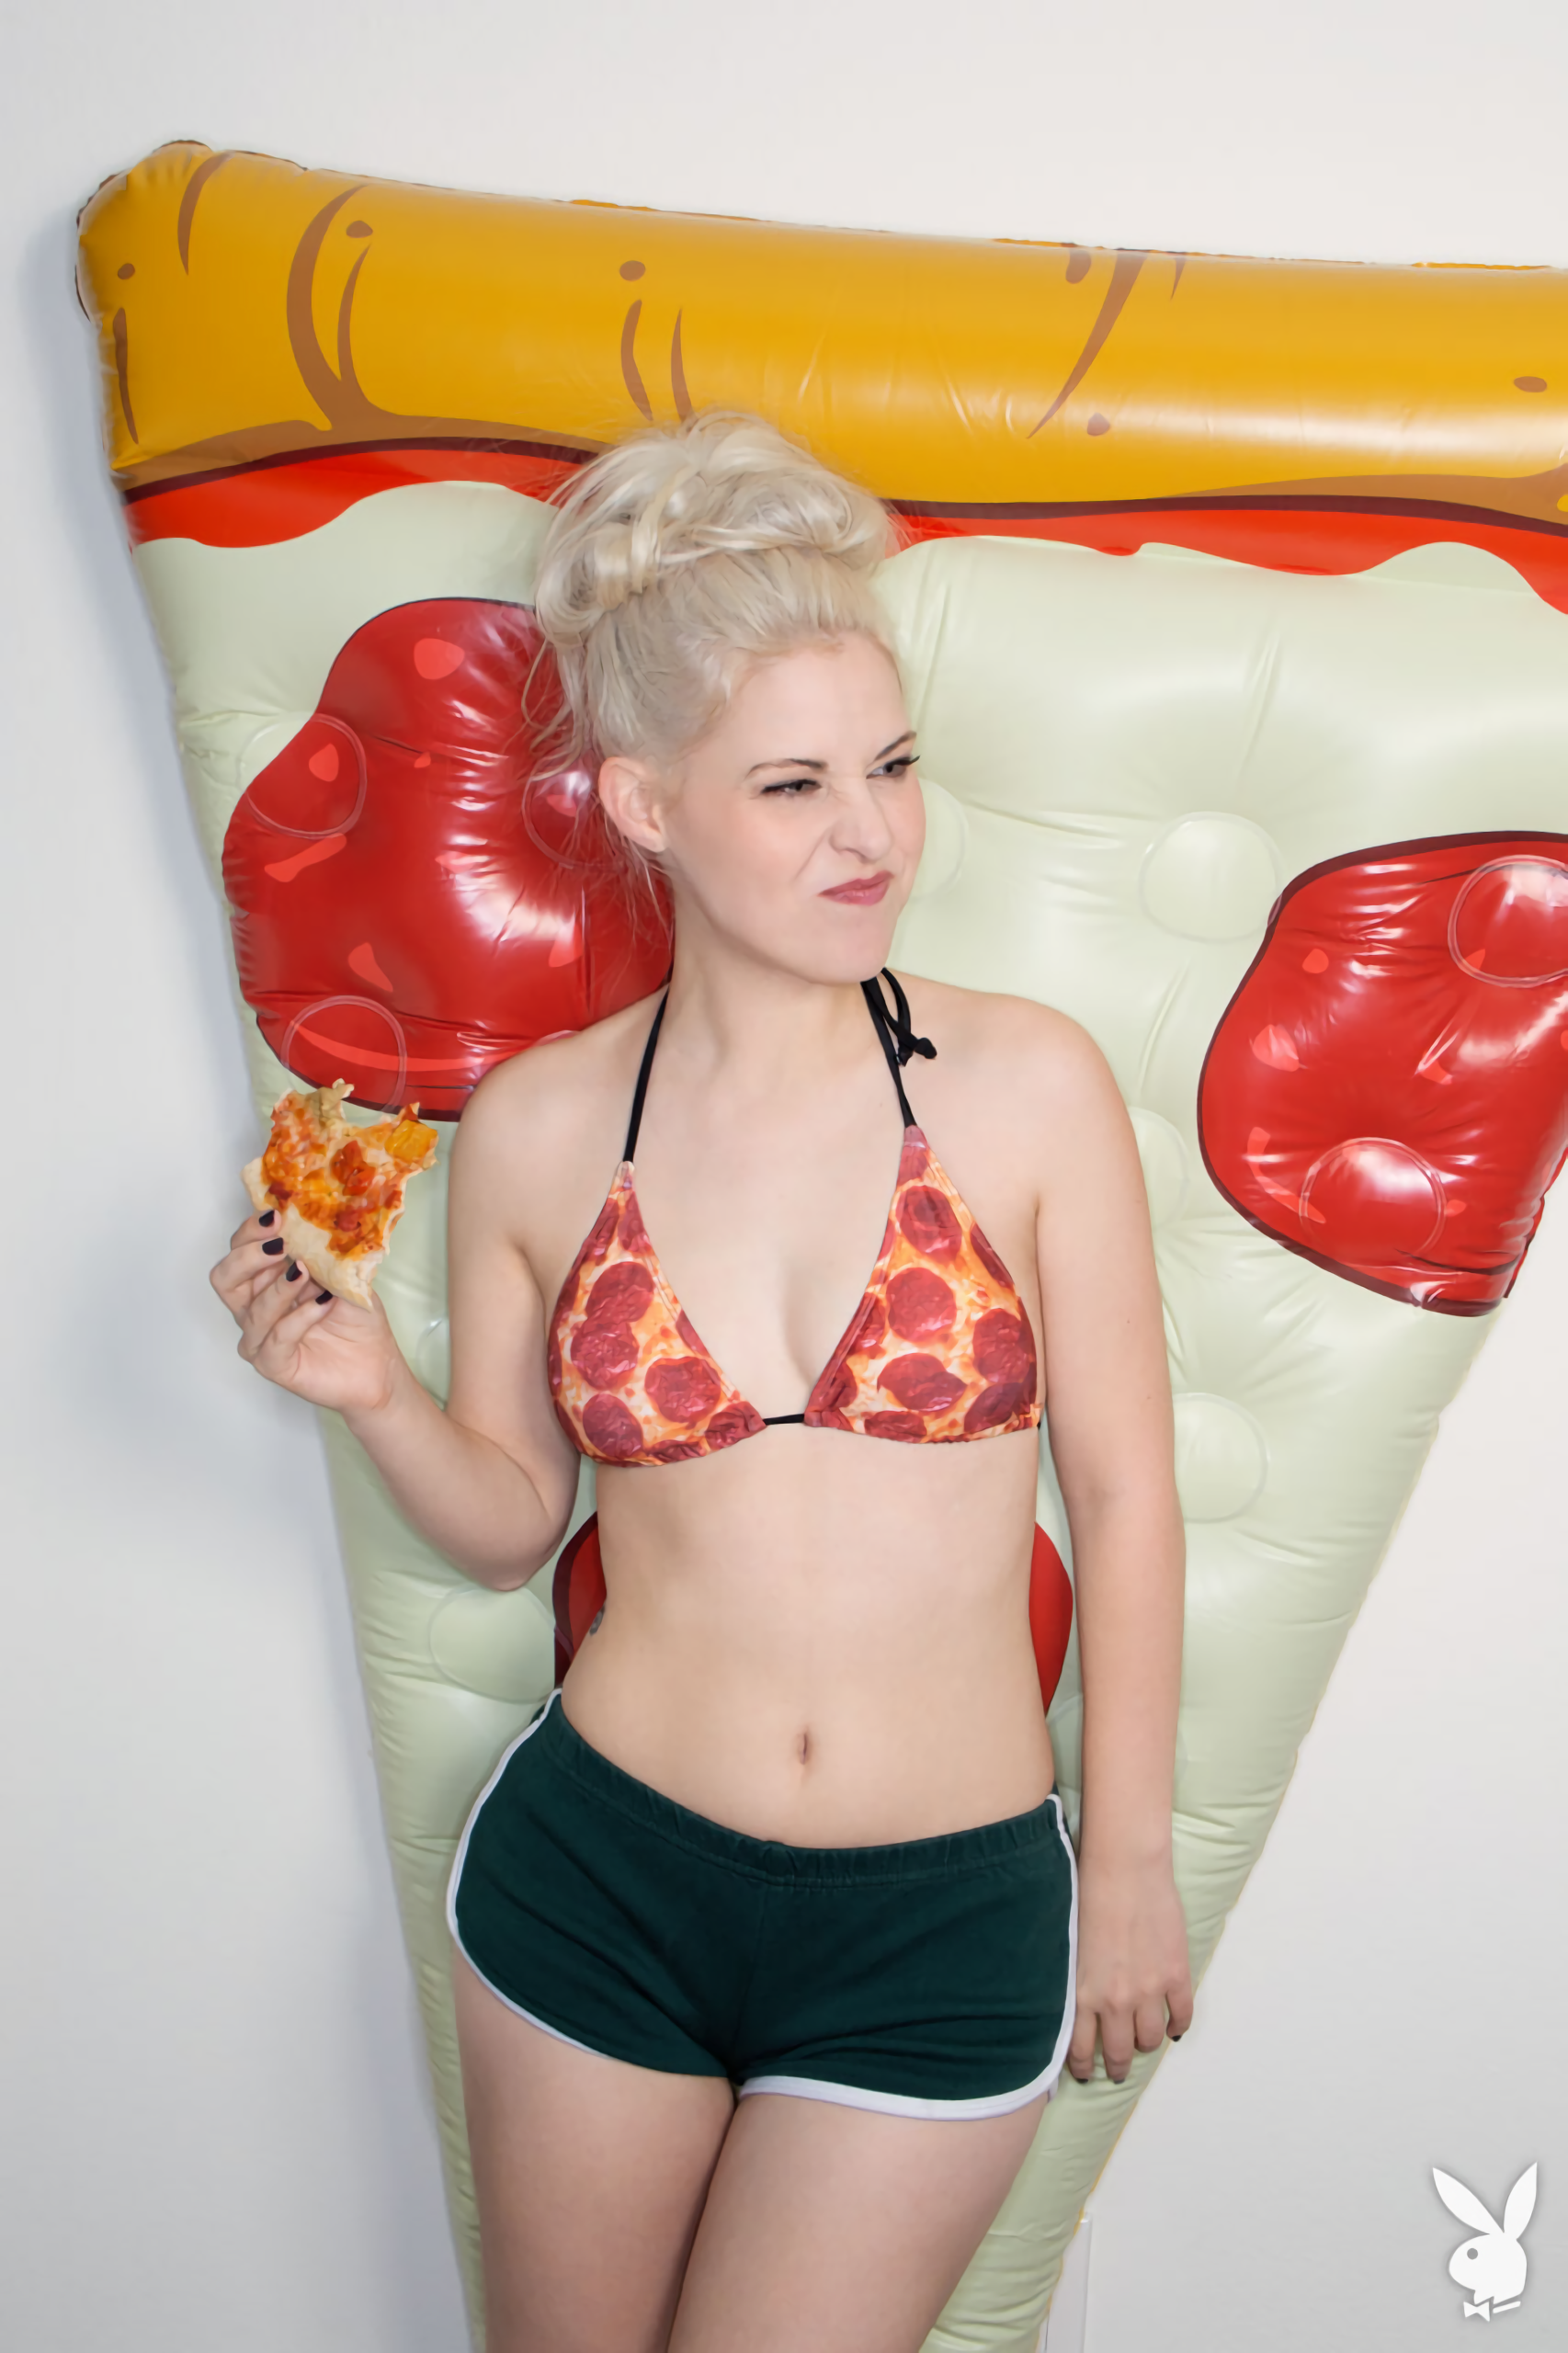 People 1706x2560 Playboy Dodger Leigh bikini pizza dexteritybonus women model blonde food belly bikini top swimwear women indoors indoors watermarked